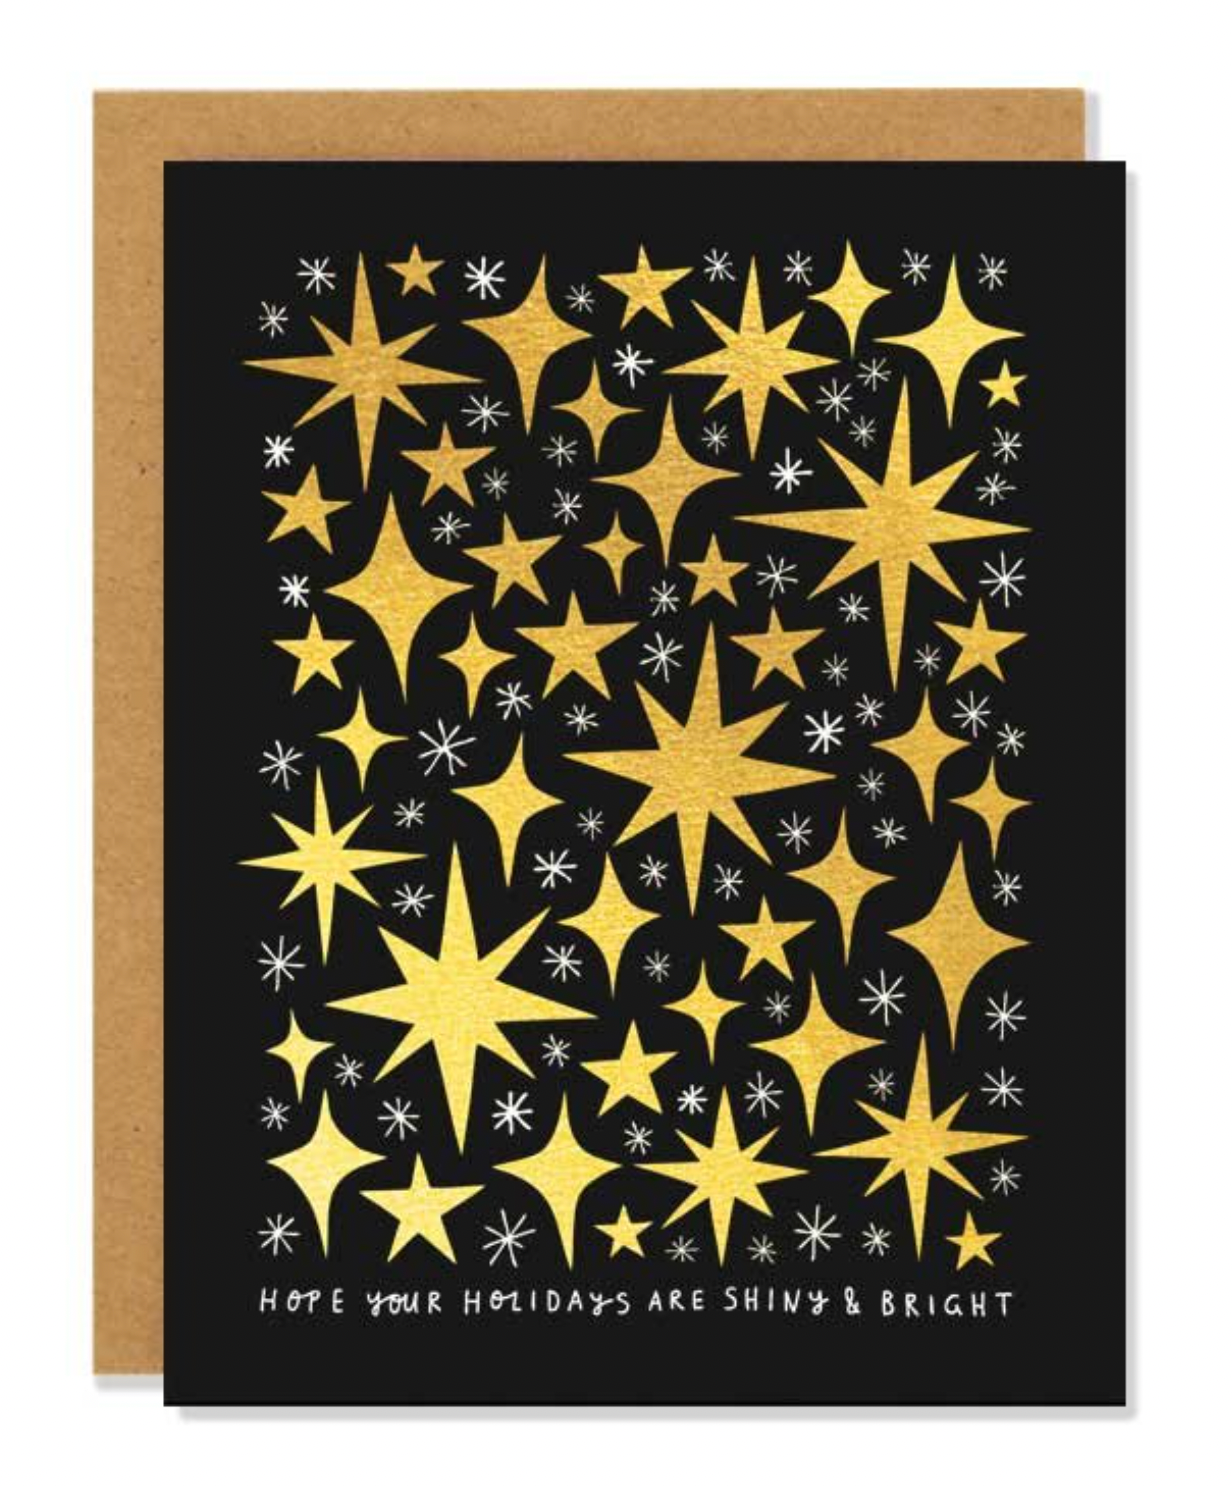 Shiny and Bright Holiday Greeting Card